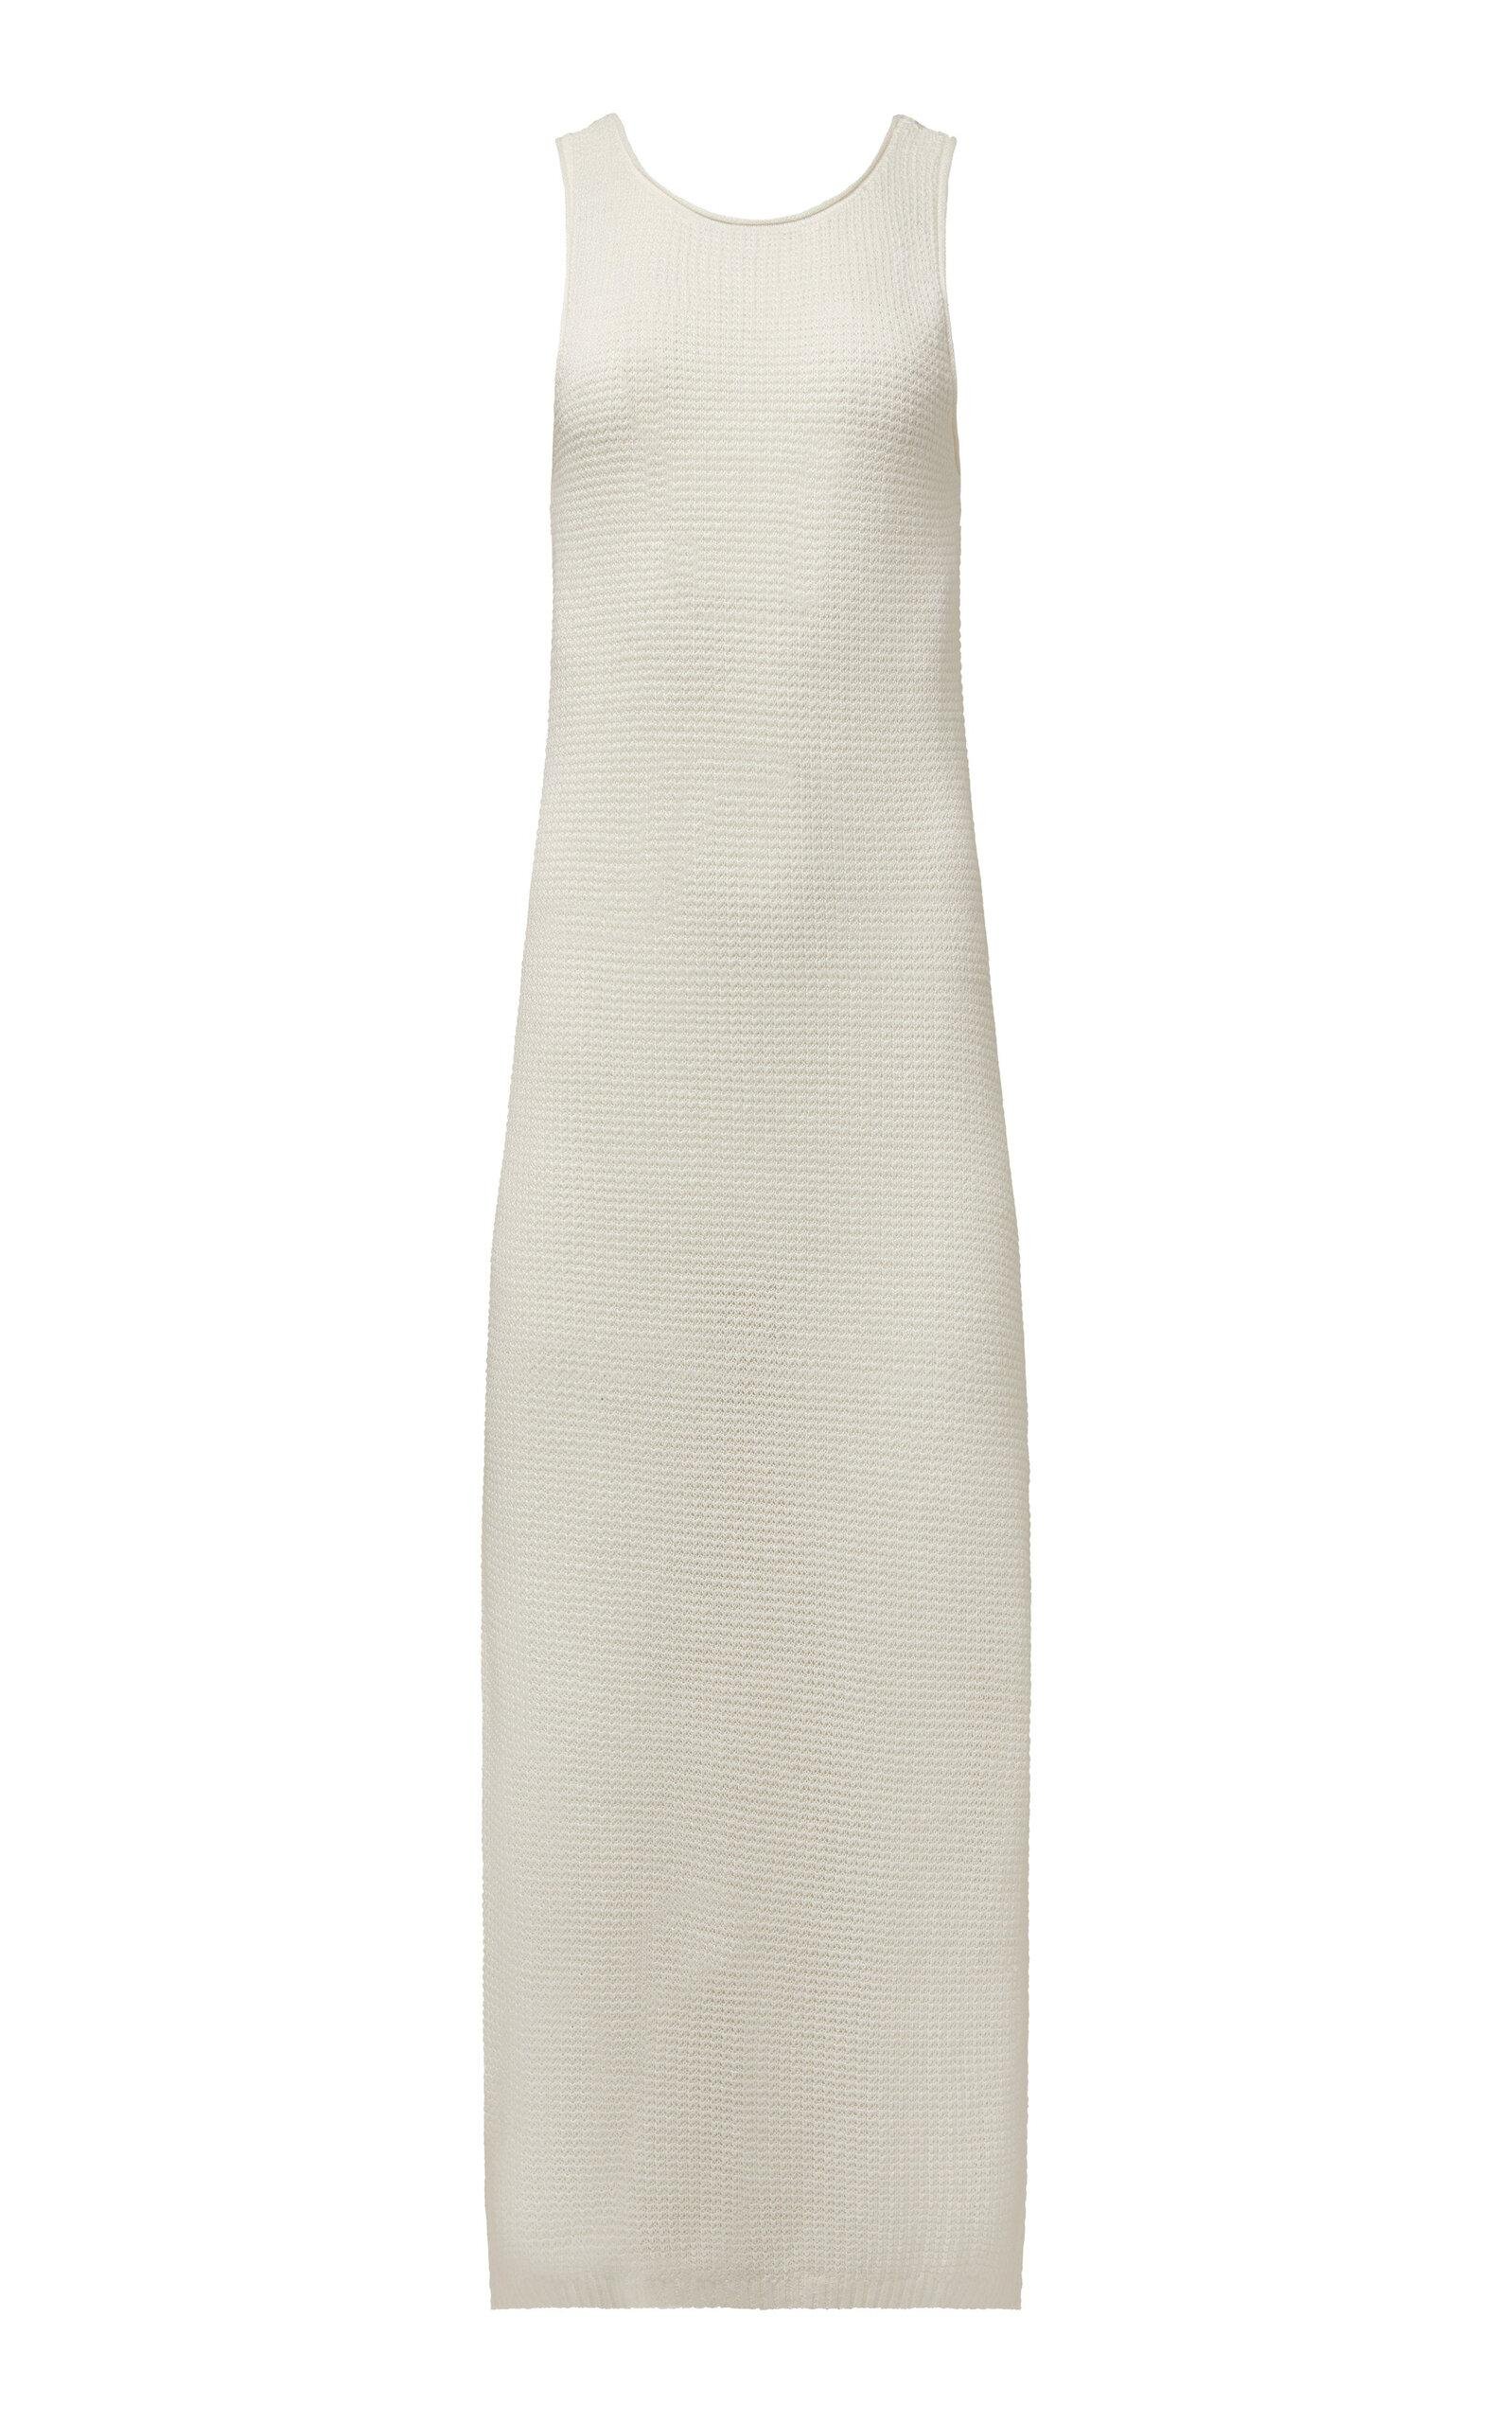 Onia - Knit Linen Cover-Up Maxi Dress - White - XL - Moda Operandi by ONIA